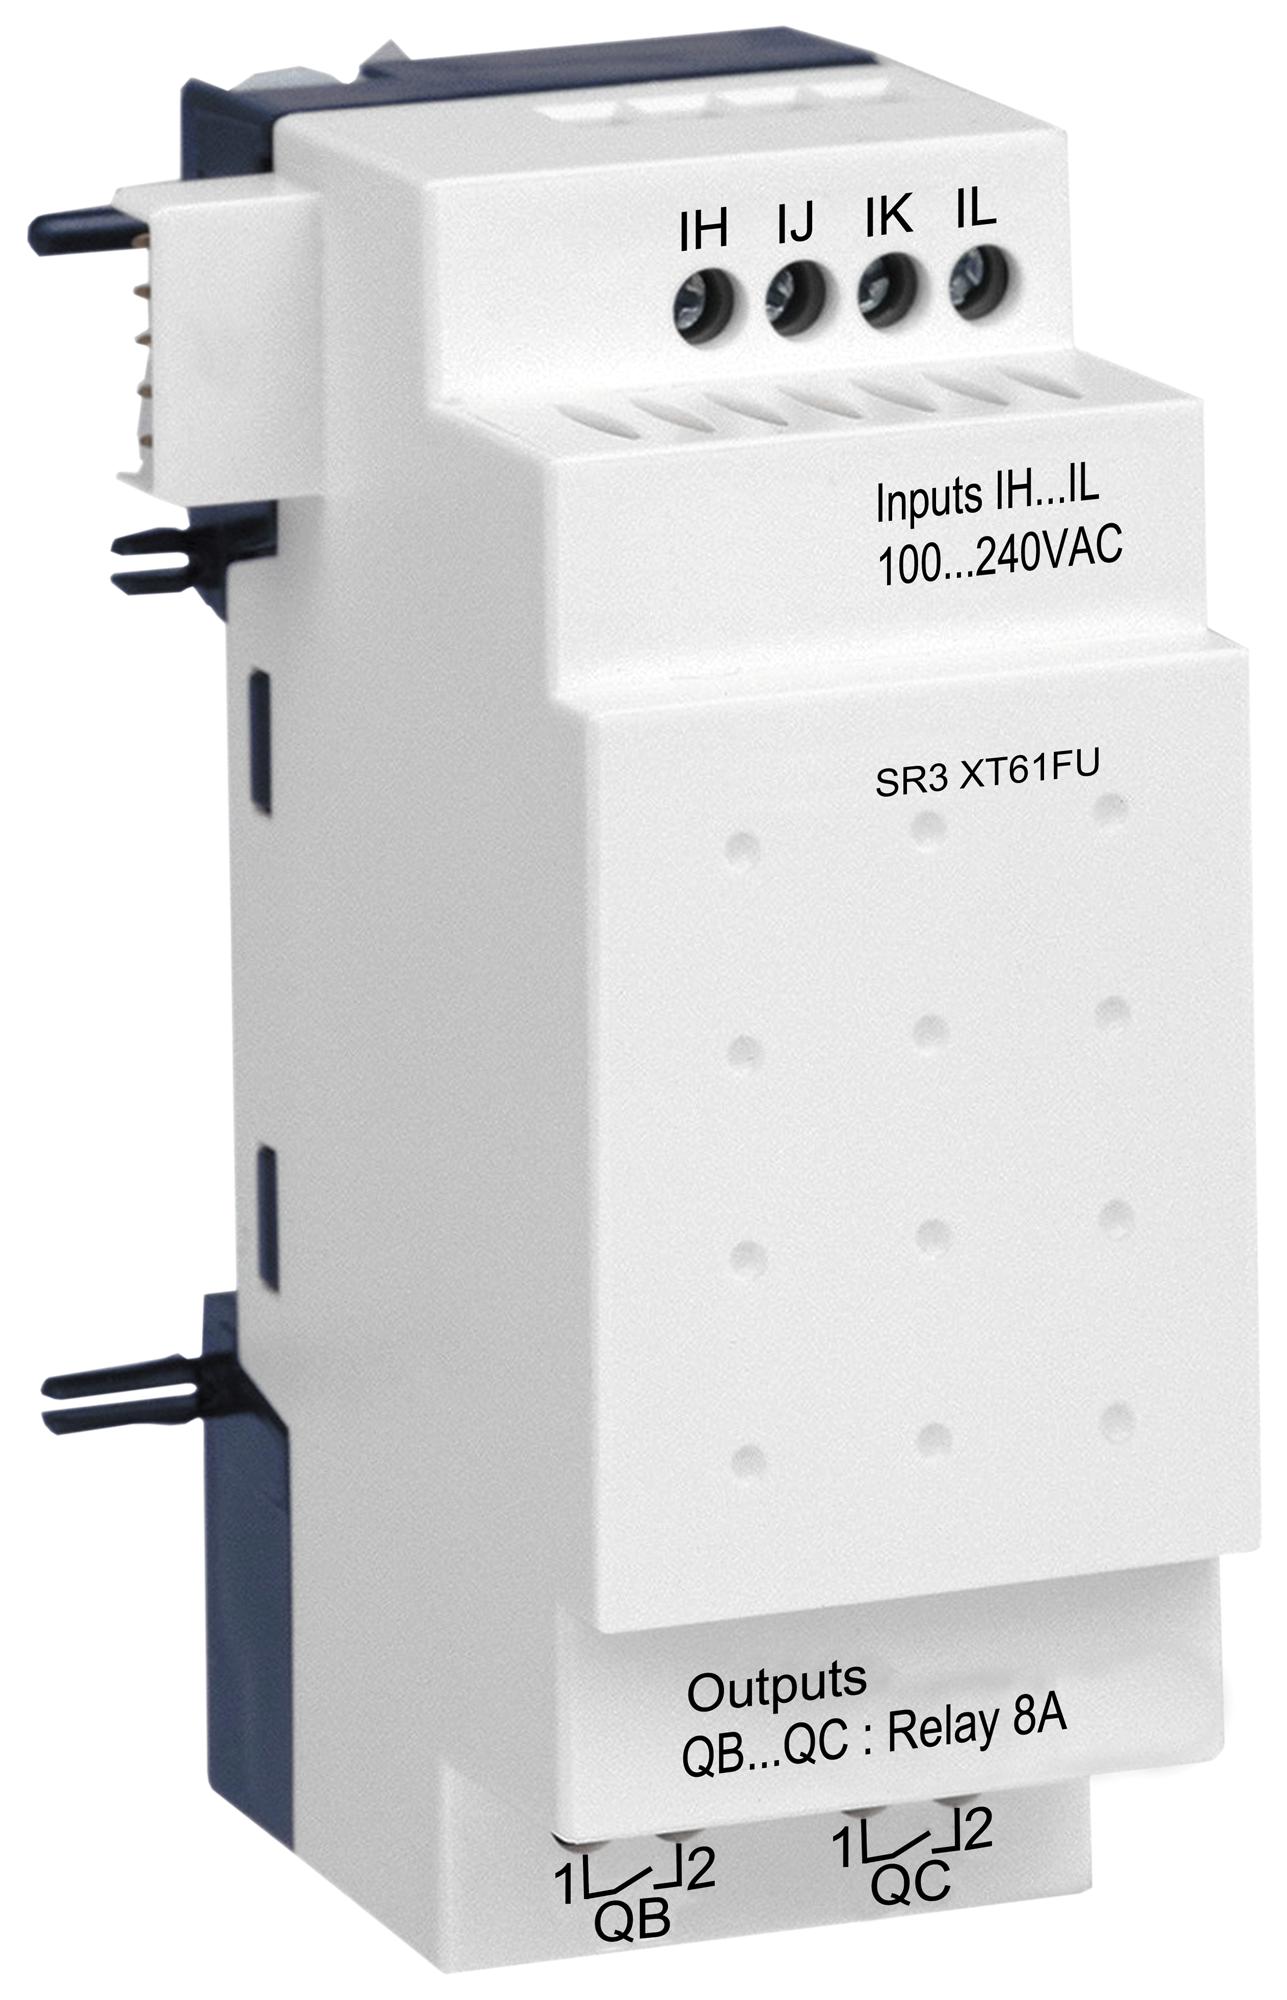 SR3XT61FU DIGITAL I/O MODULE, 4 I/P, 2 O/P, 240VAC SCHNEIDER ELECTRIC